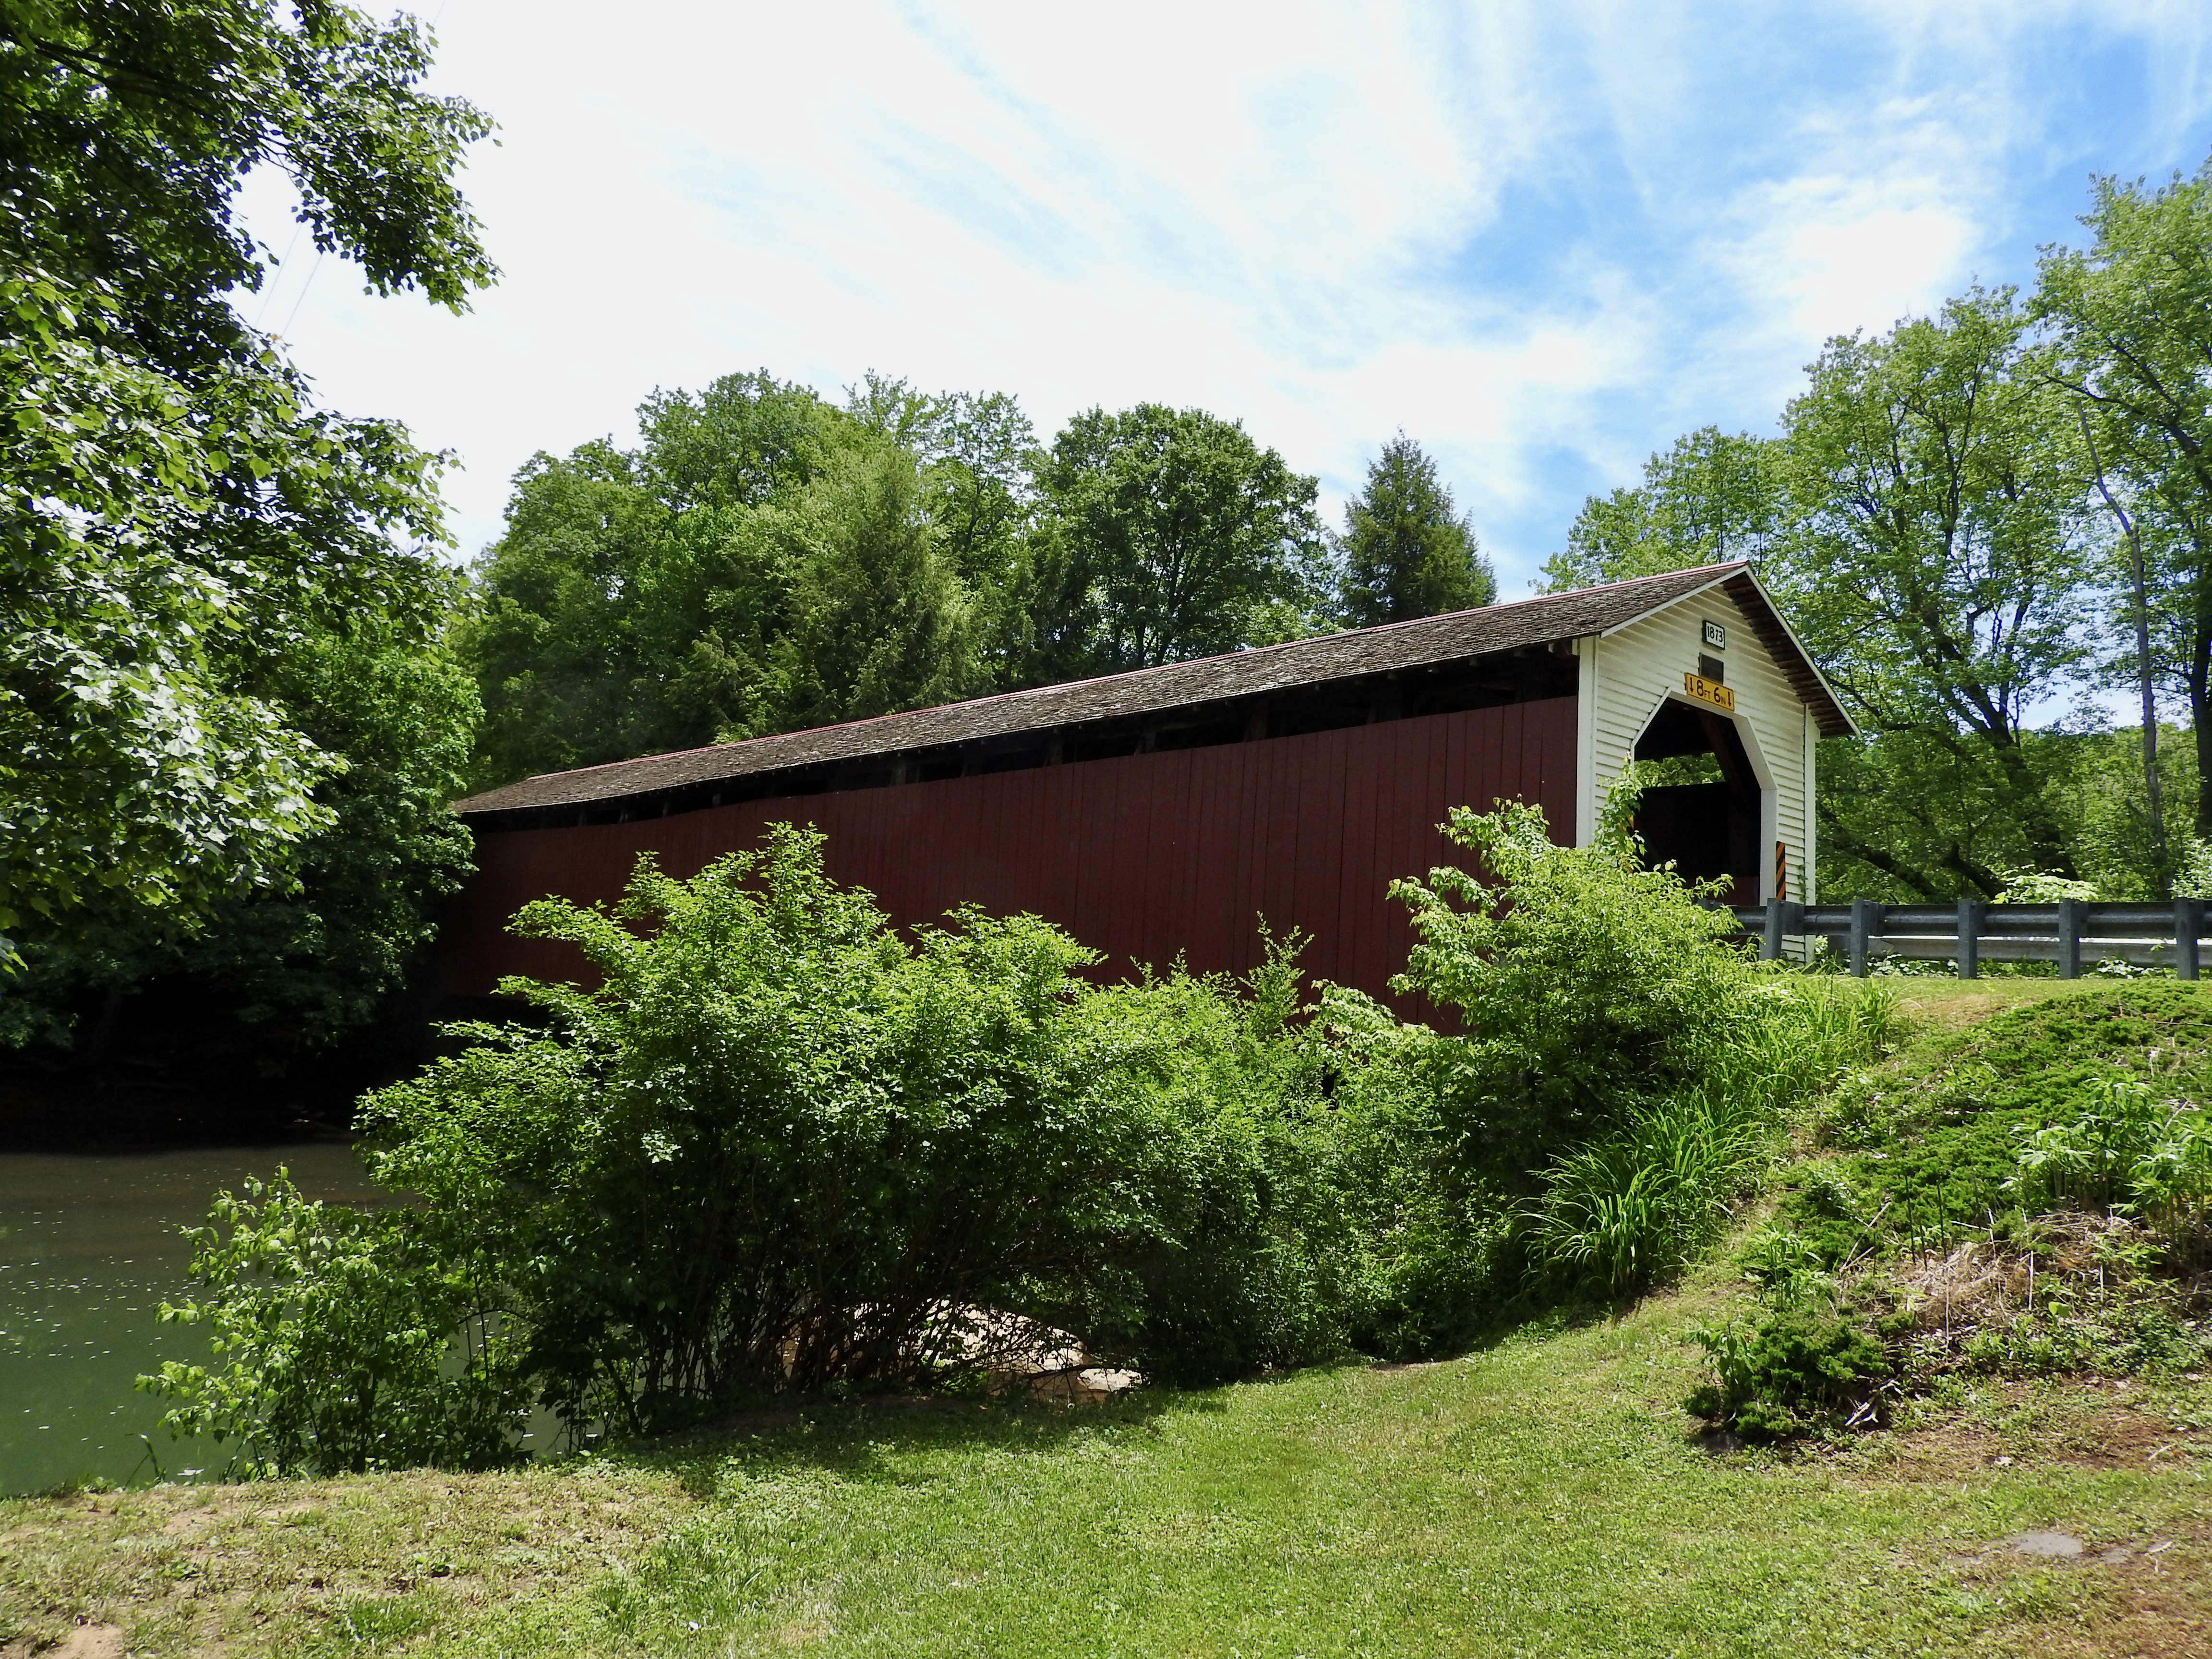 McGees Mills Covered Bridge near Mahaffey, Pennsylvania